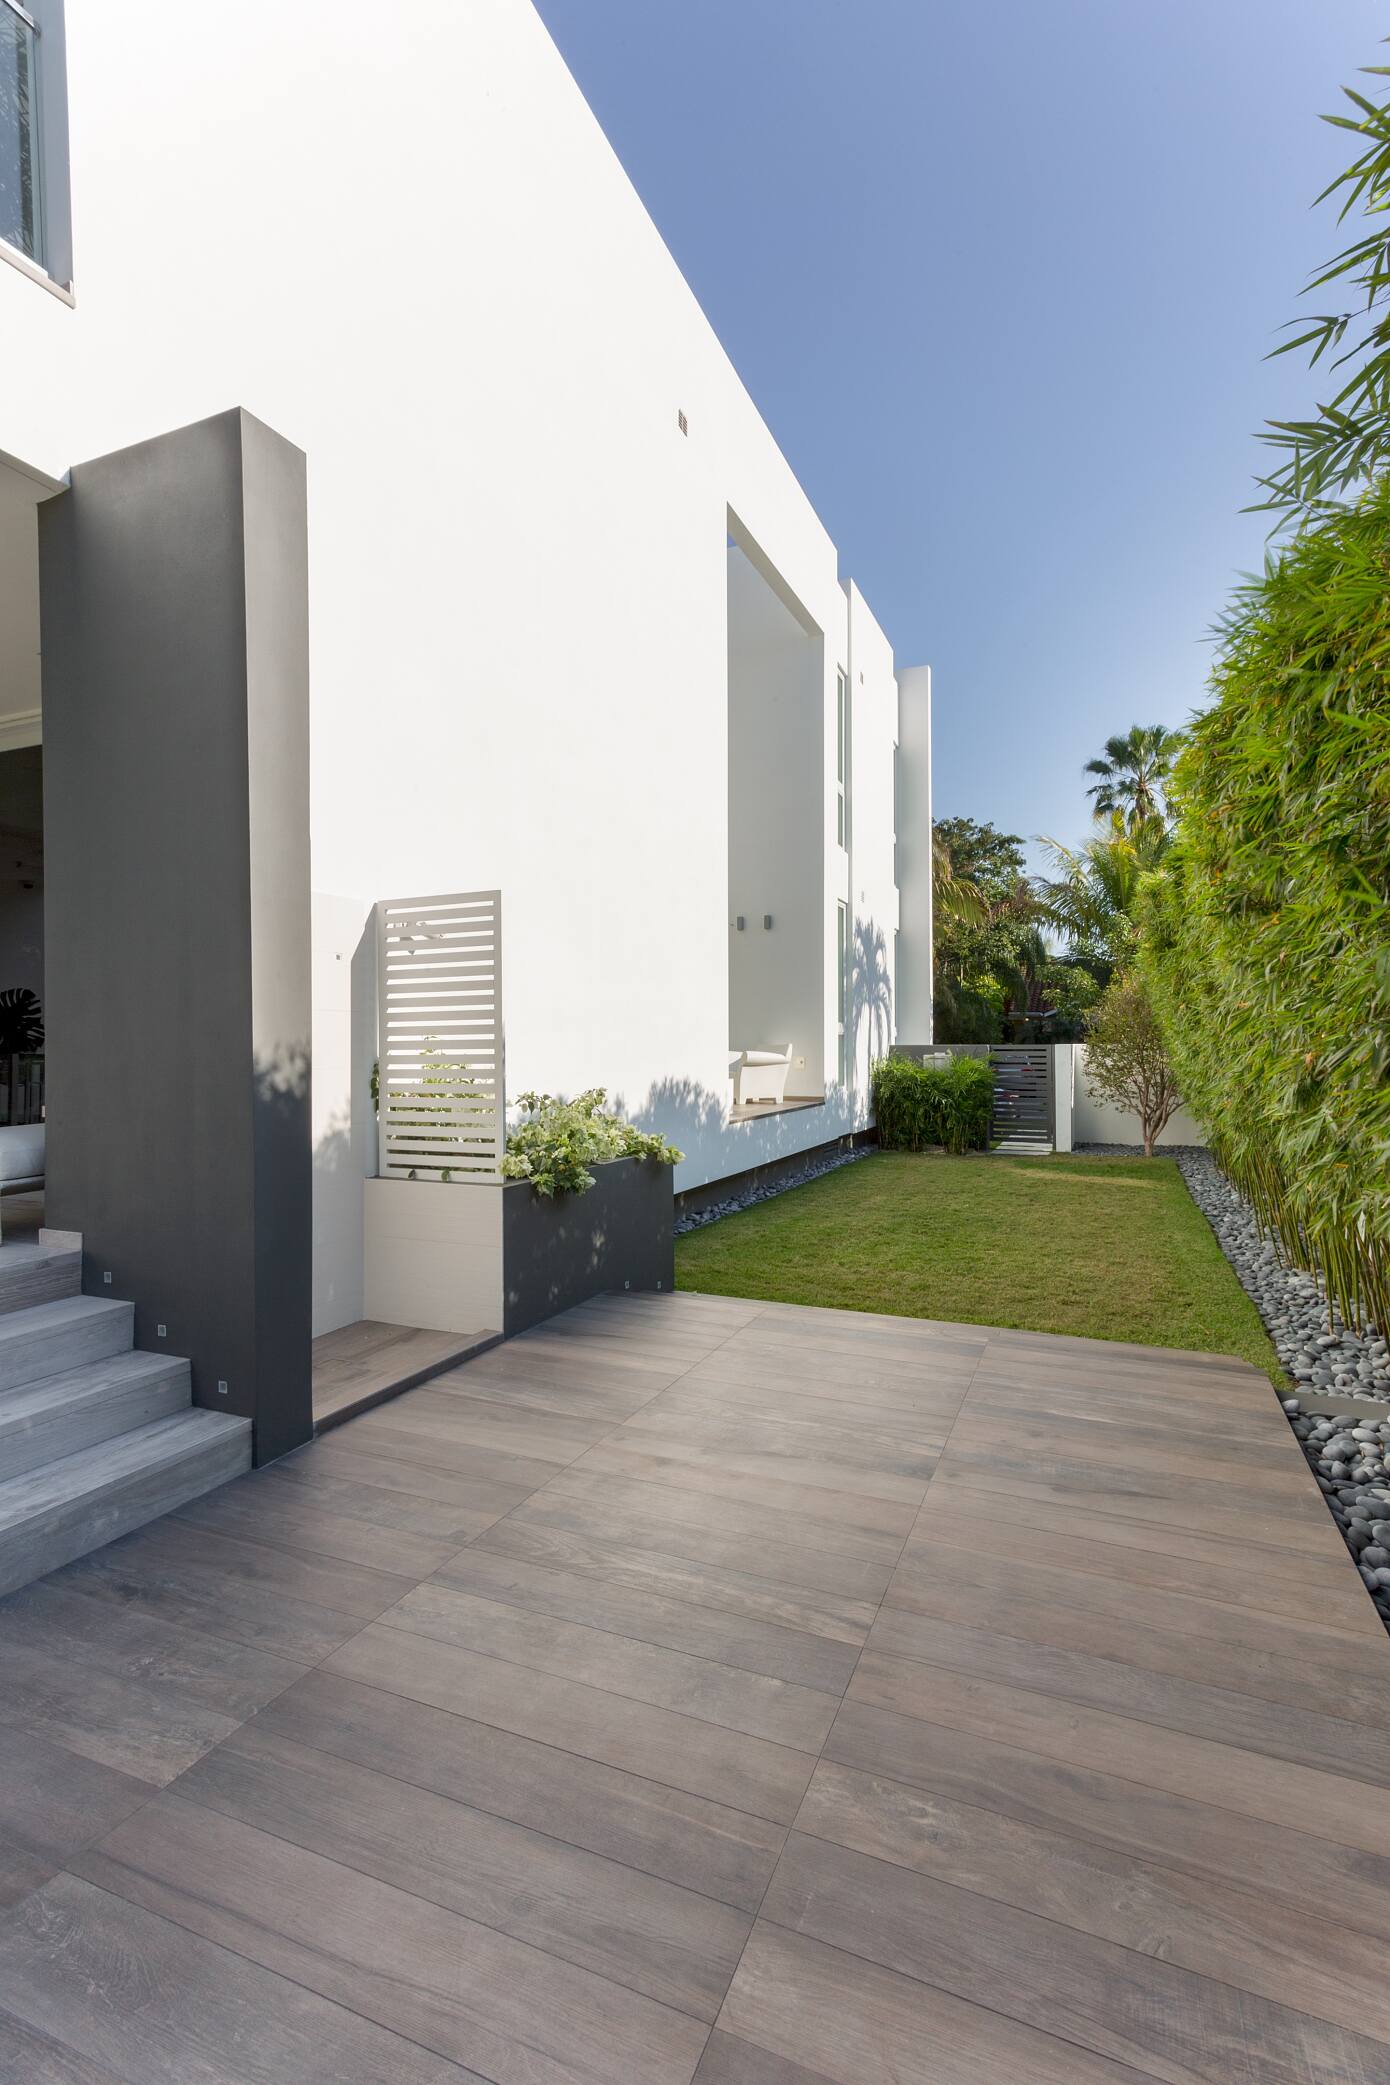 Villa RL by Federico Delrosso Architects